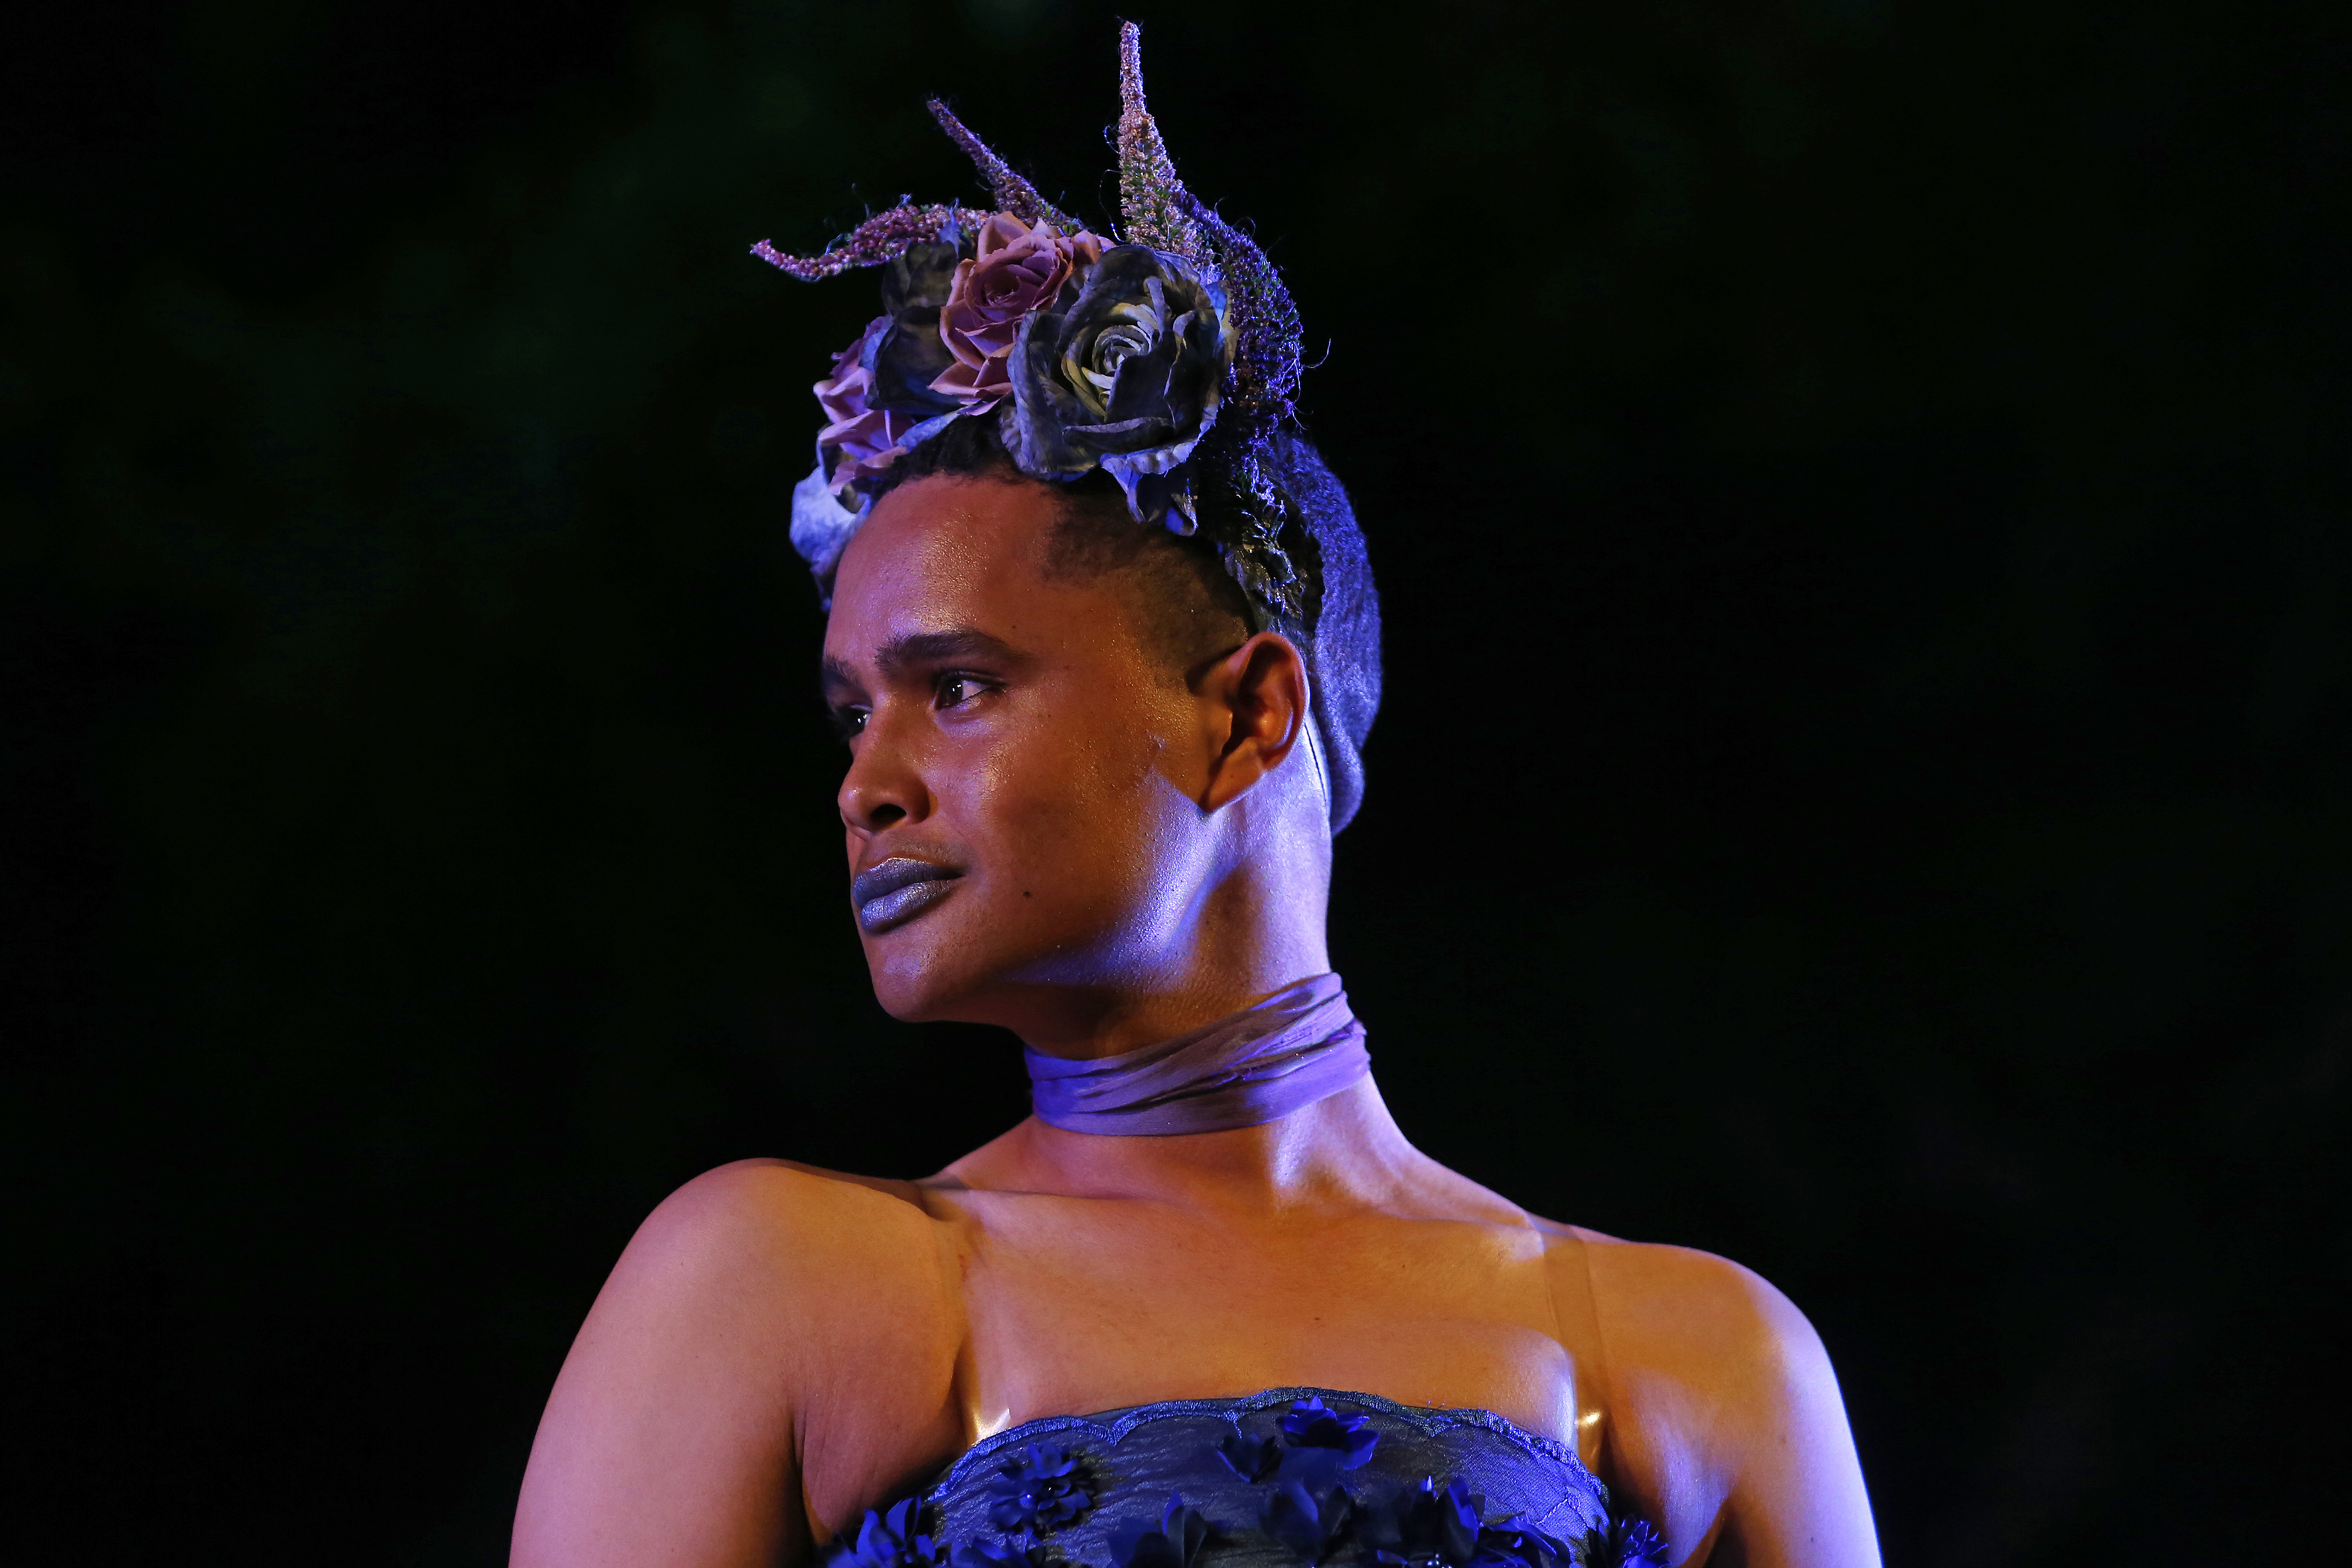 Roberto Kyle as Titania in Shakespeare's 'A Midsummer Night's Dream' at Maynardville. Image: Mark Wessels